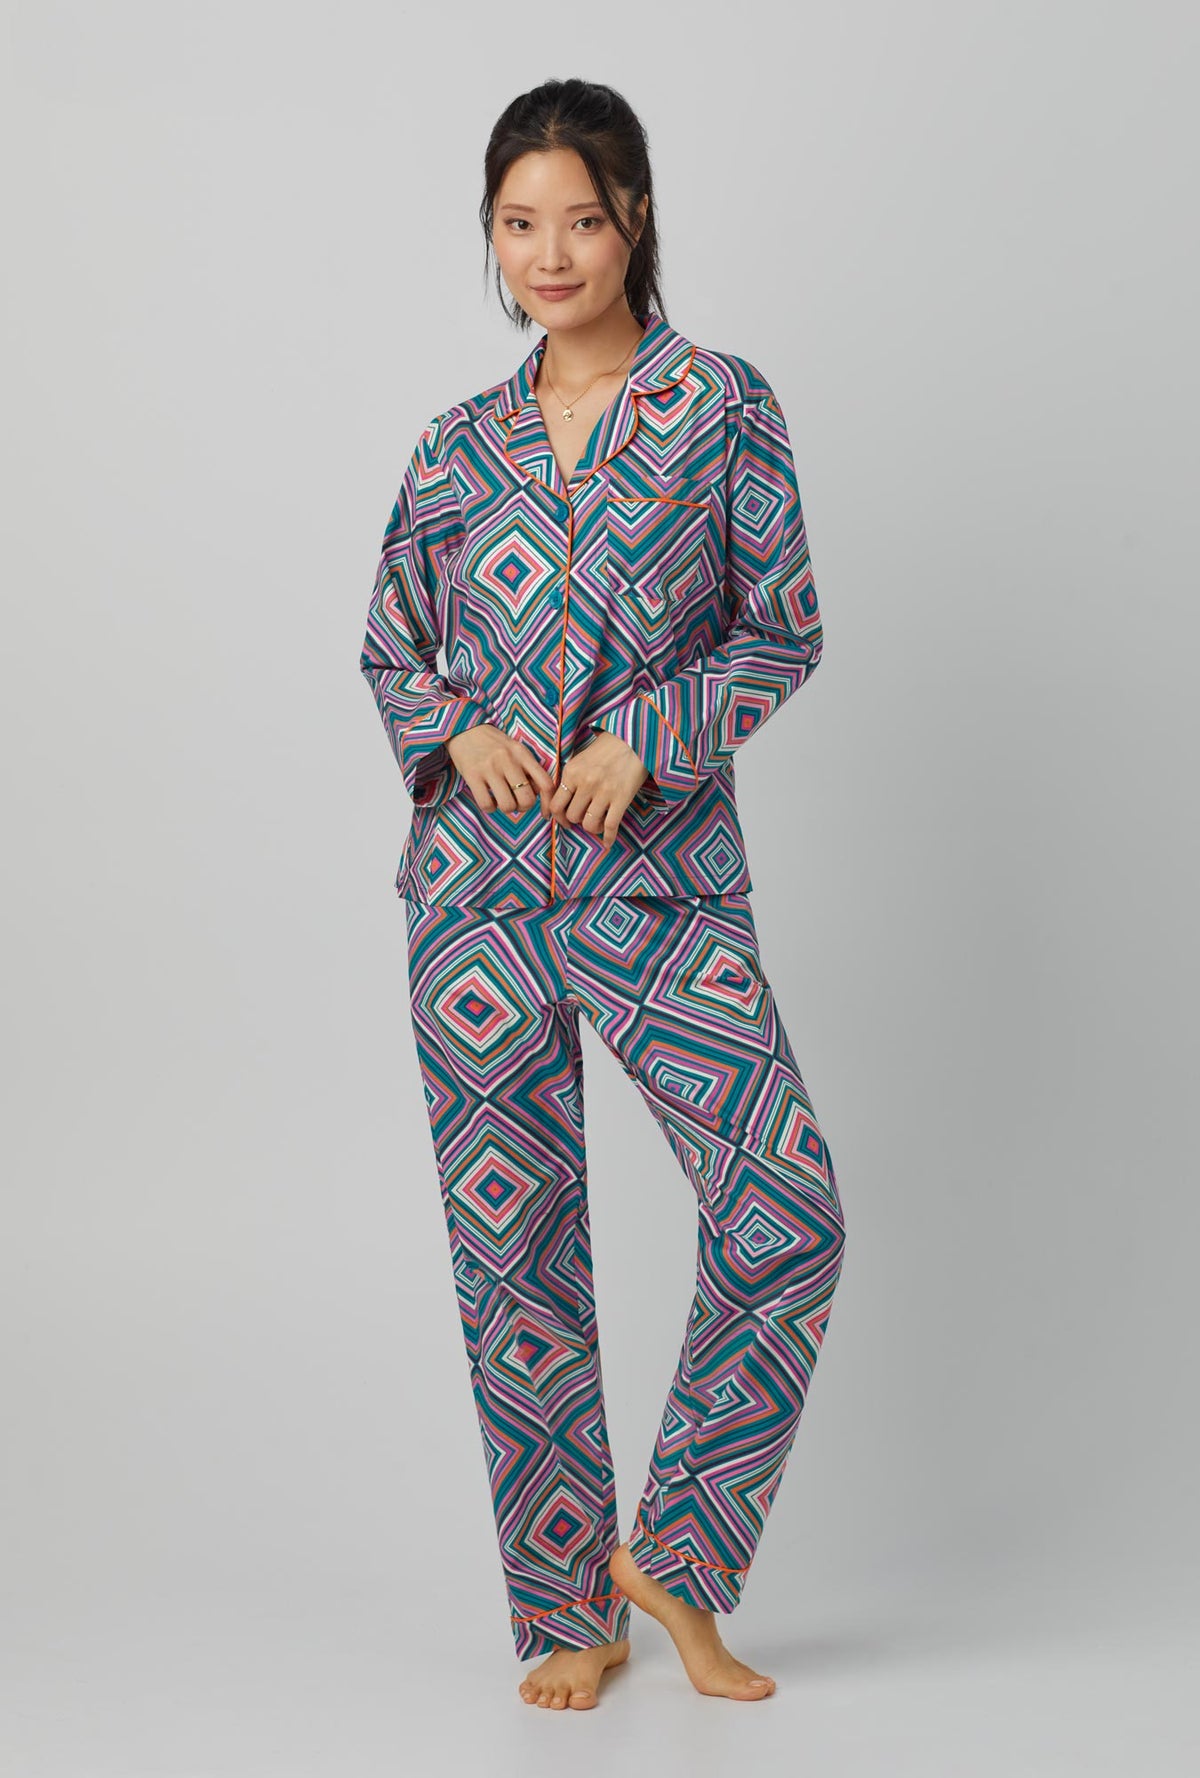 A lady wearing Long Sleeve Classic Woven Cotton Poplin PJ Set with diamond geo print